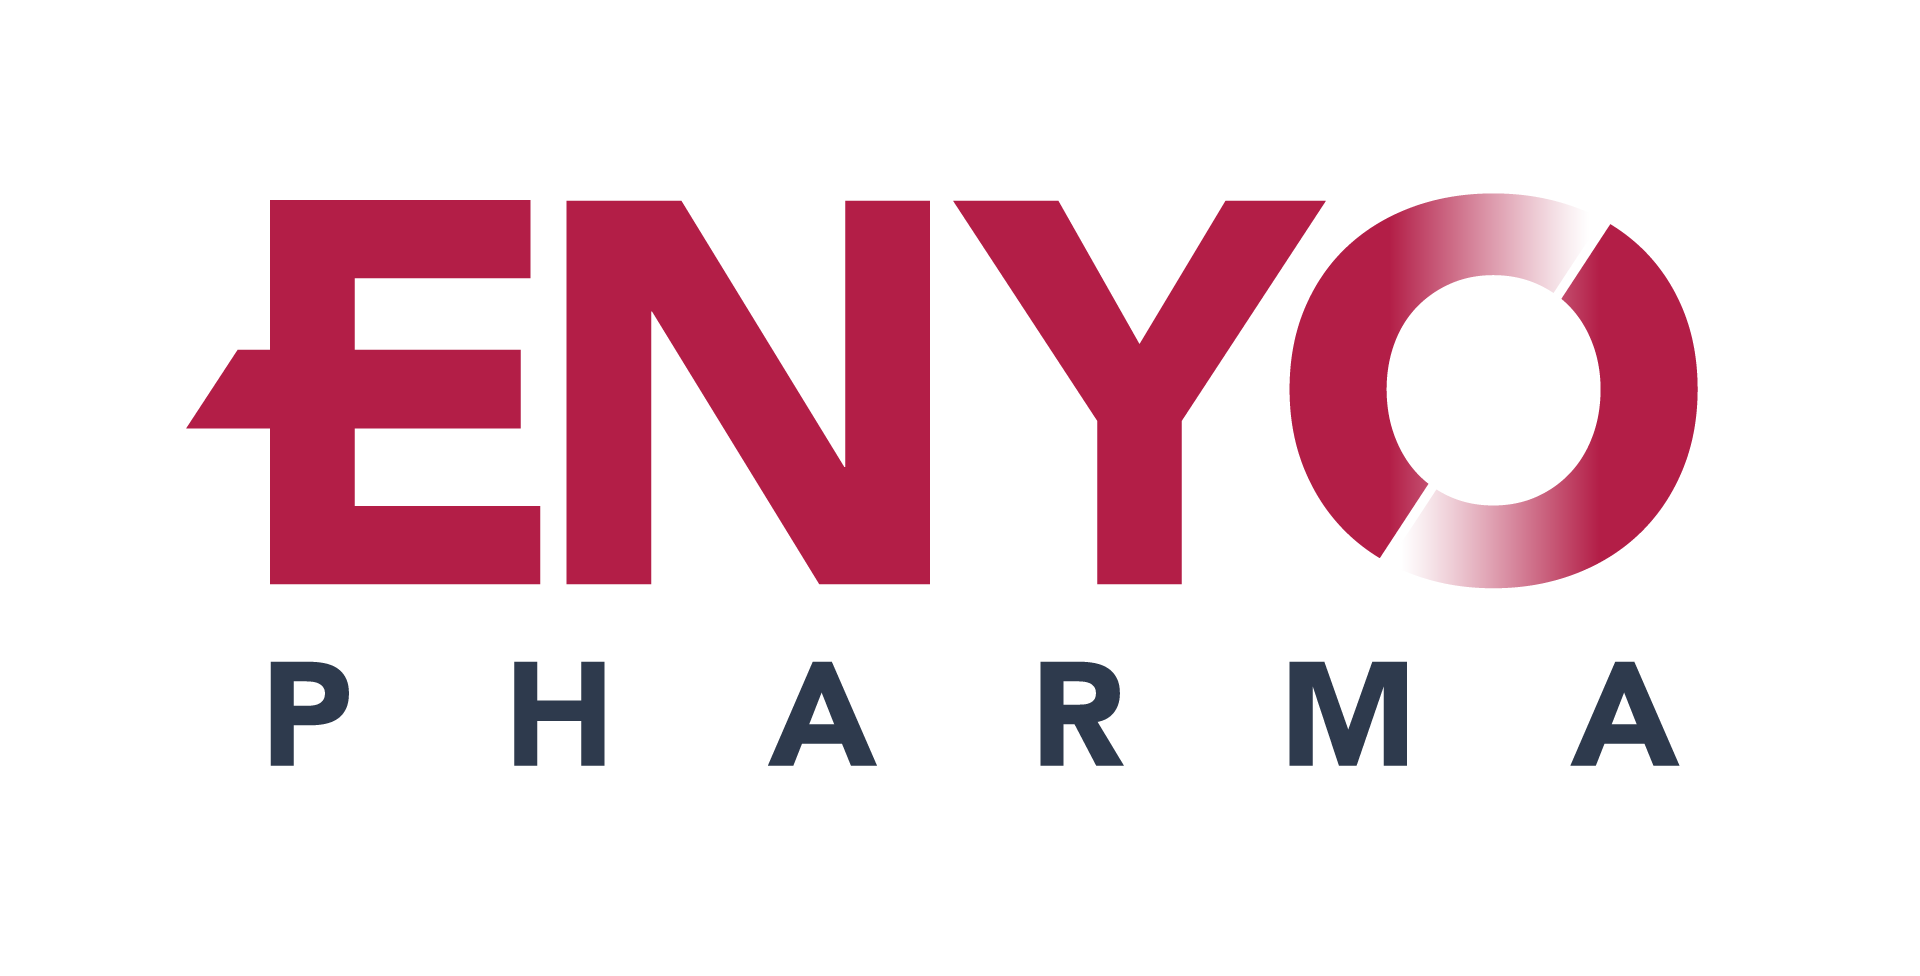 ENYO Pharma_Logo_No background (002)